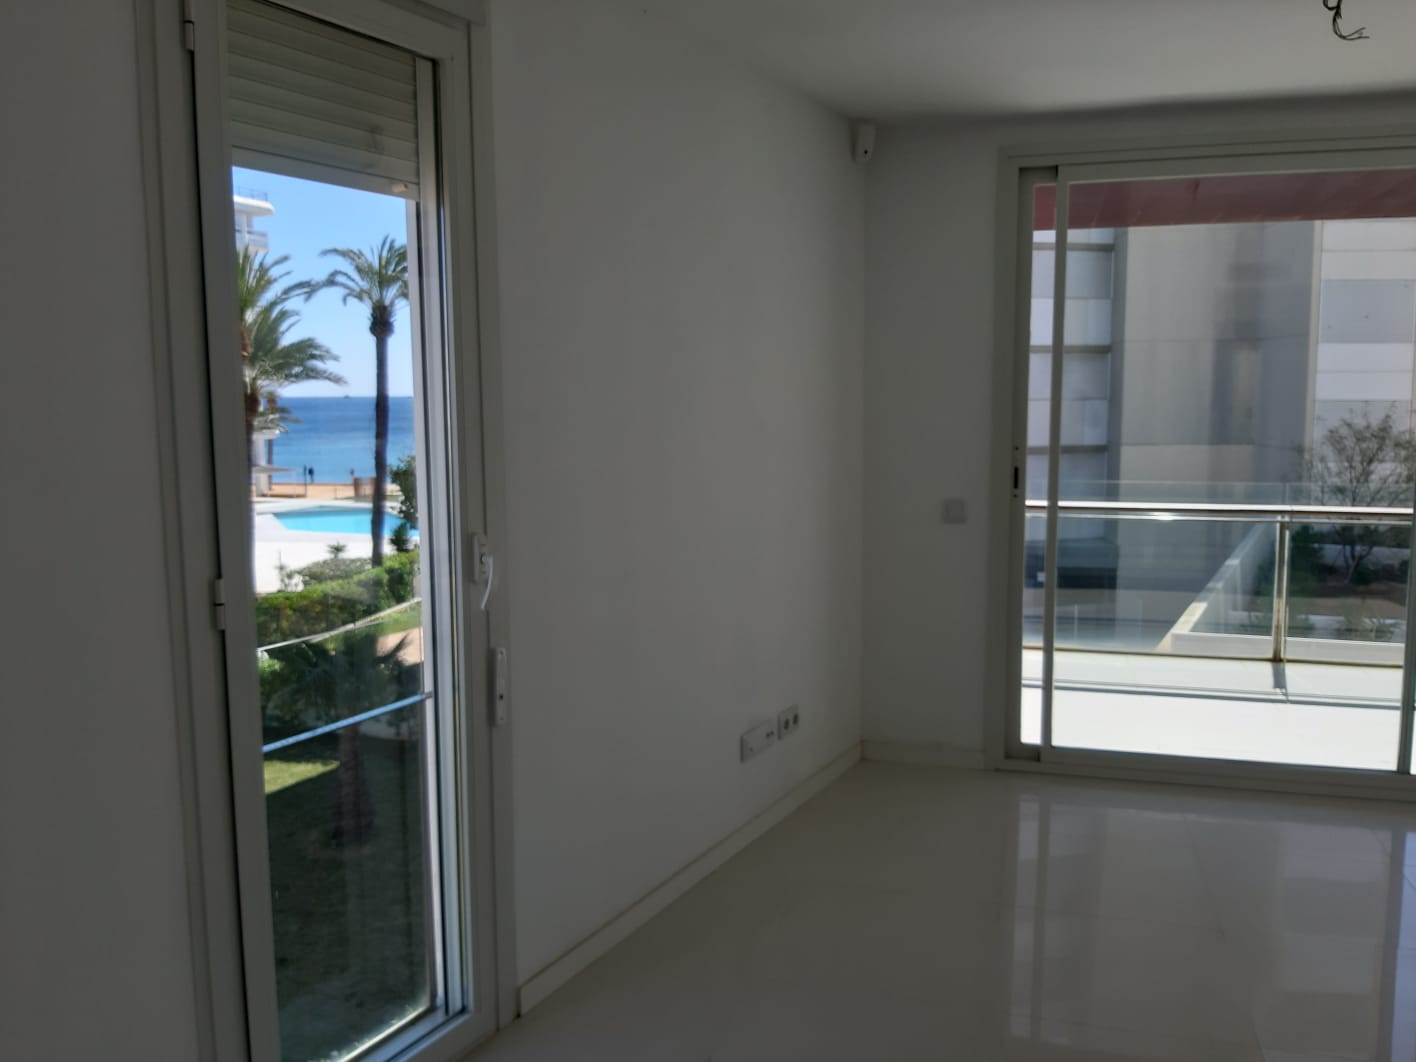 Lovely 2 bedroom apartment in modern residence facing the sea in Playa d'en Bossa, Ibiza